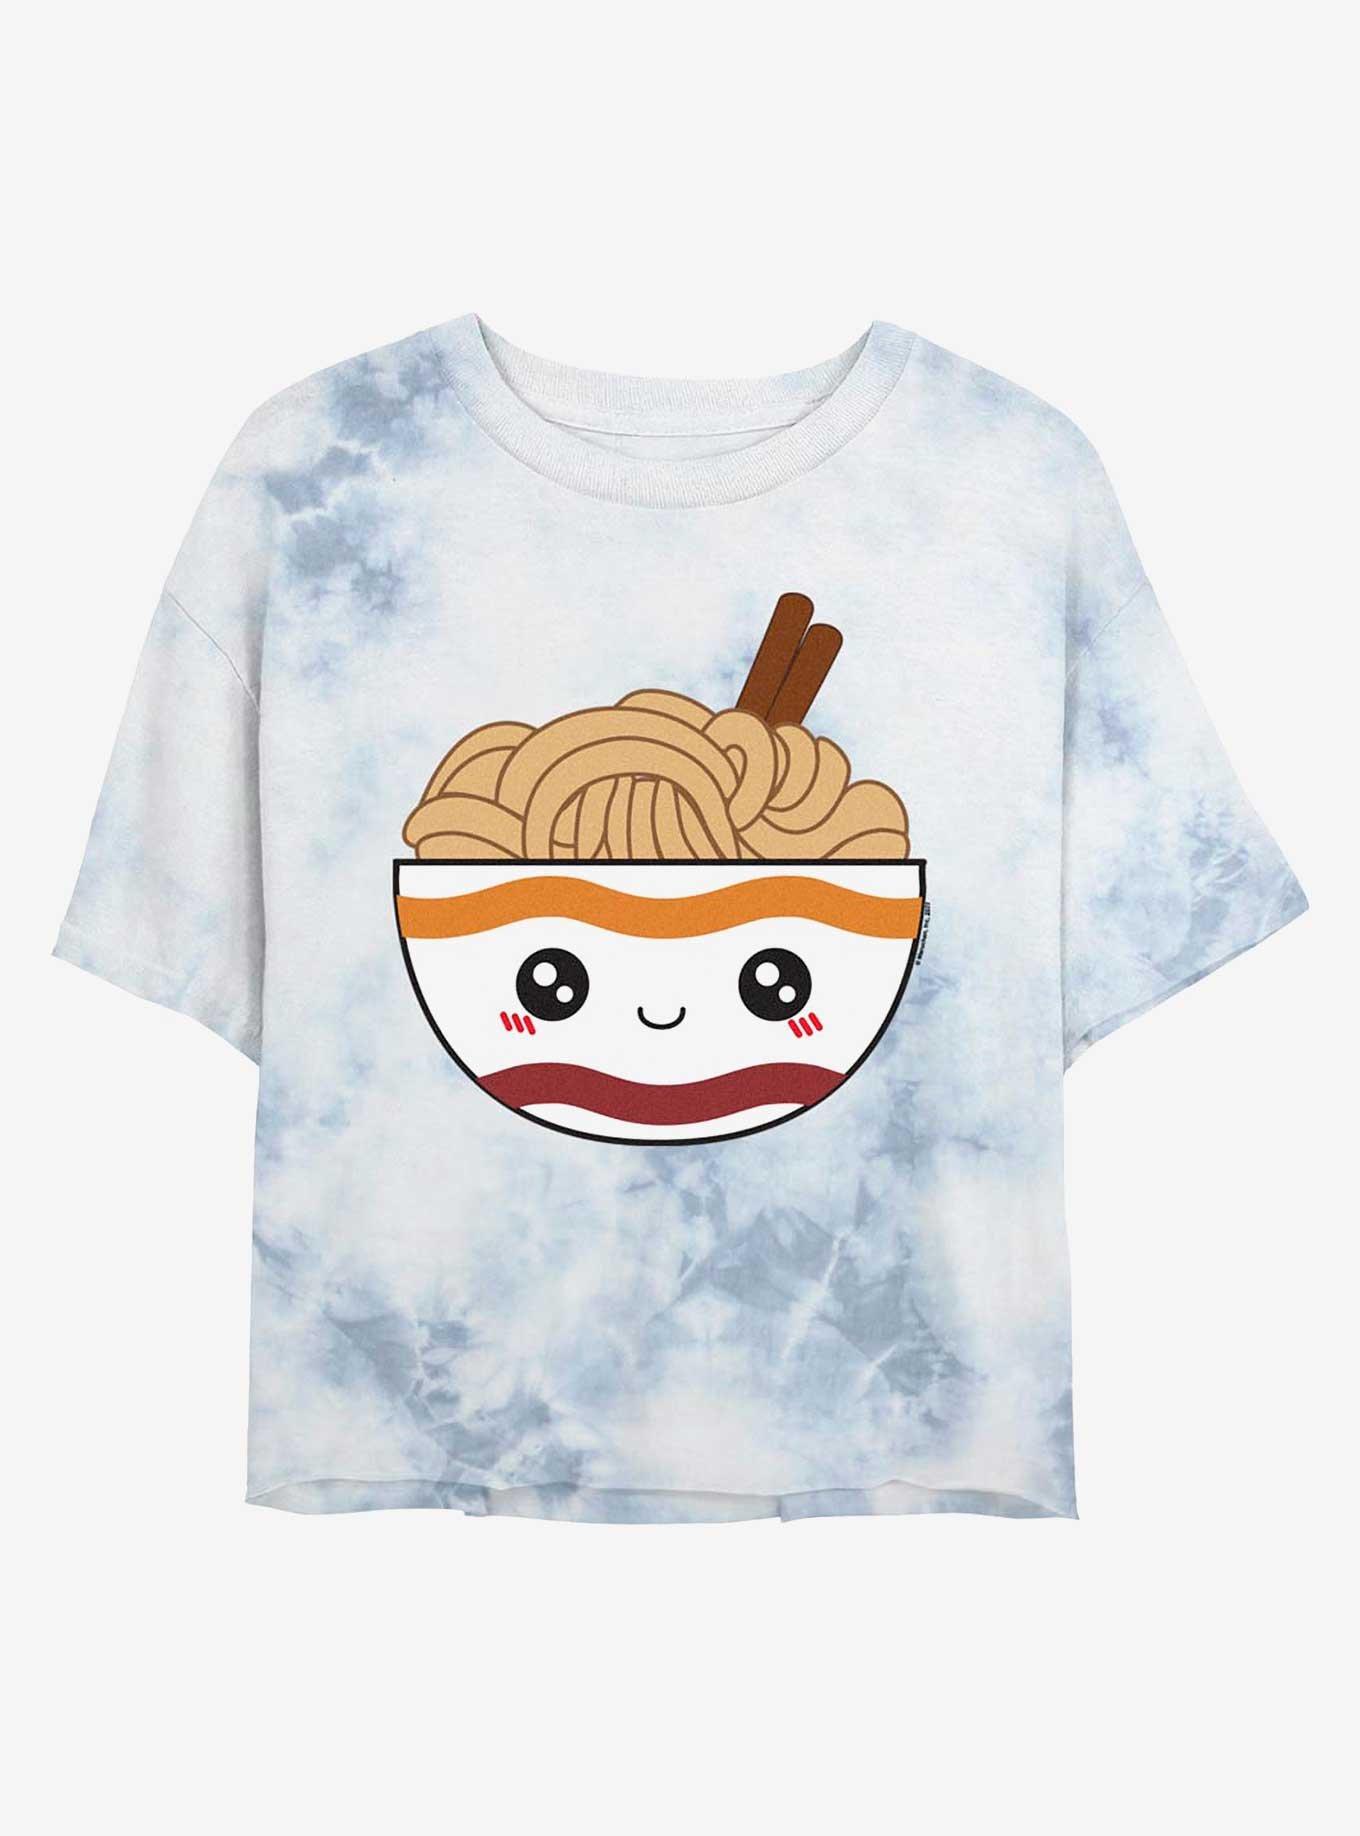 Maruchan Noodle Bowl Tie-Dye Girls Crop T-Shirt, WHITEBLUE, hi-res